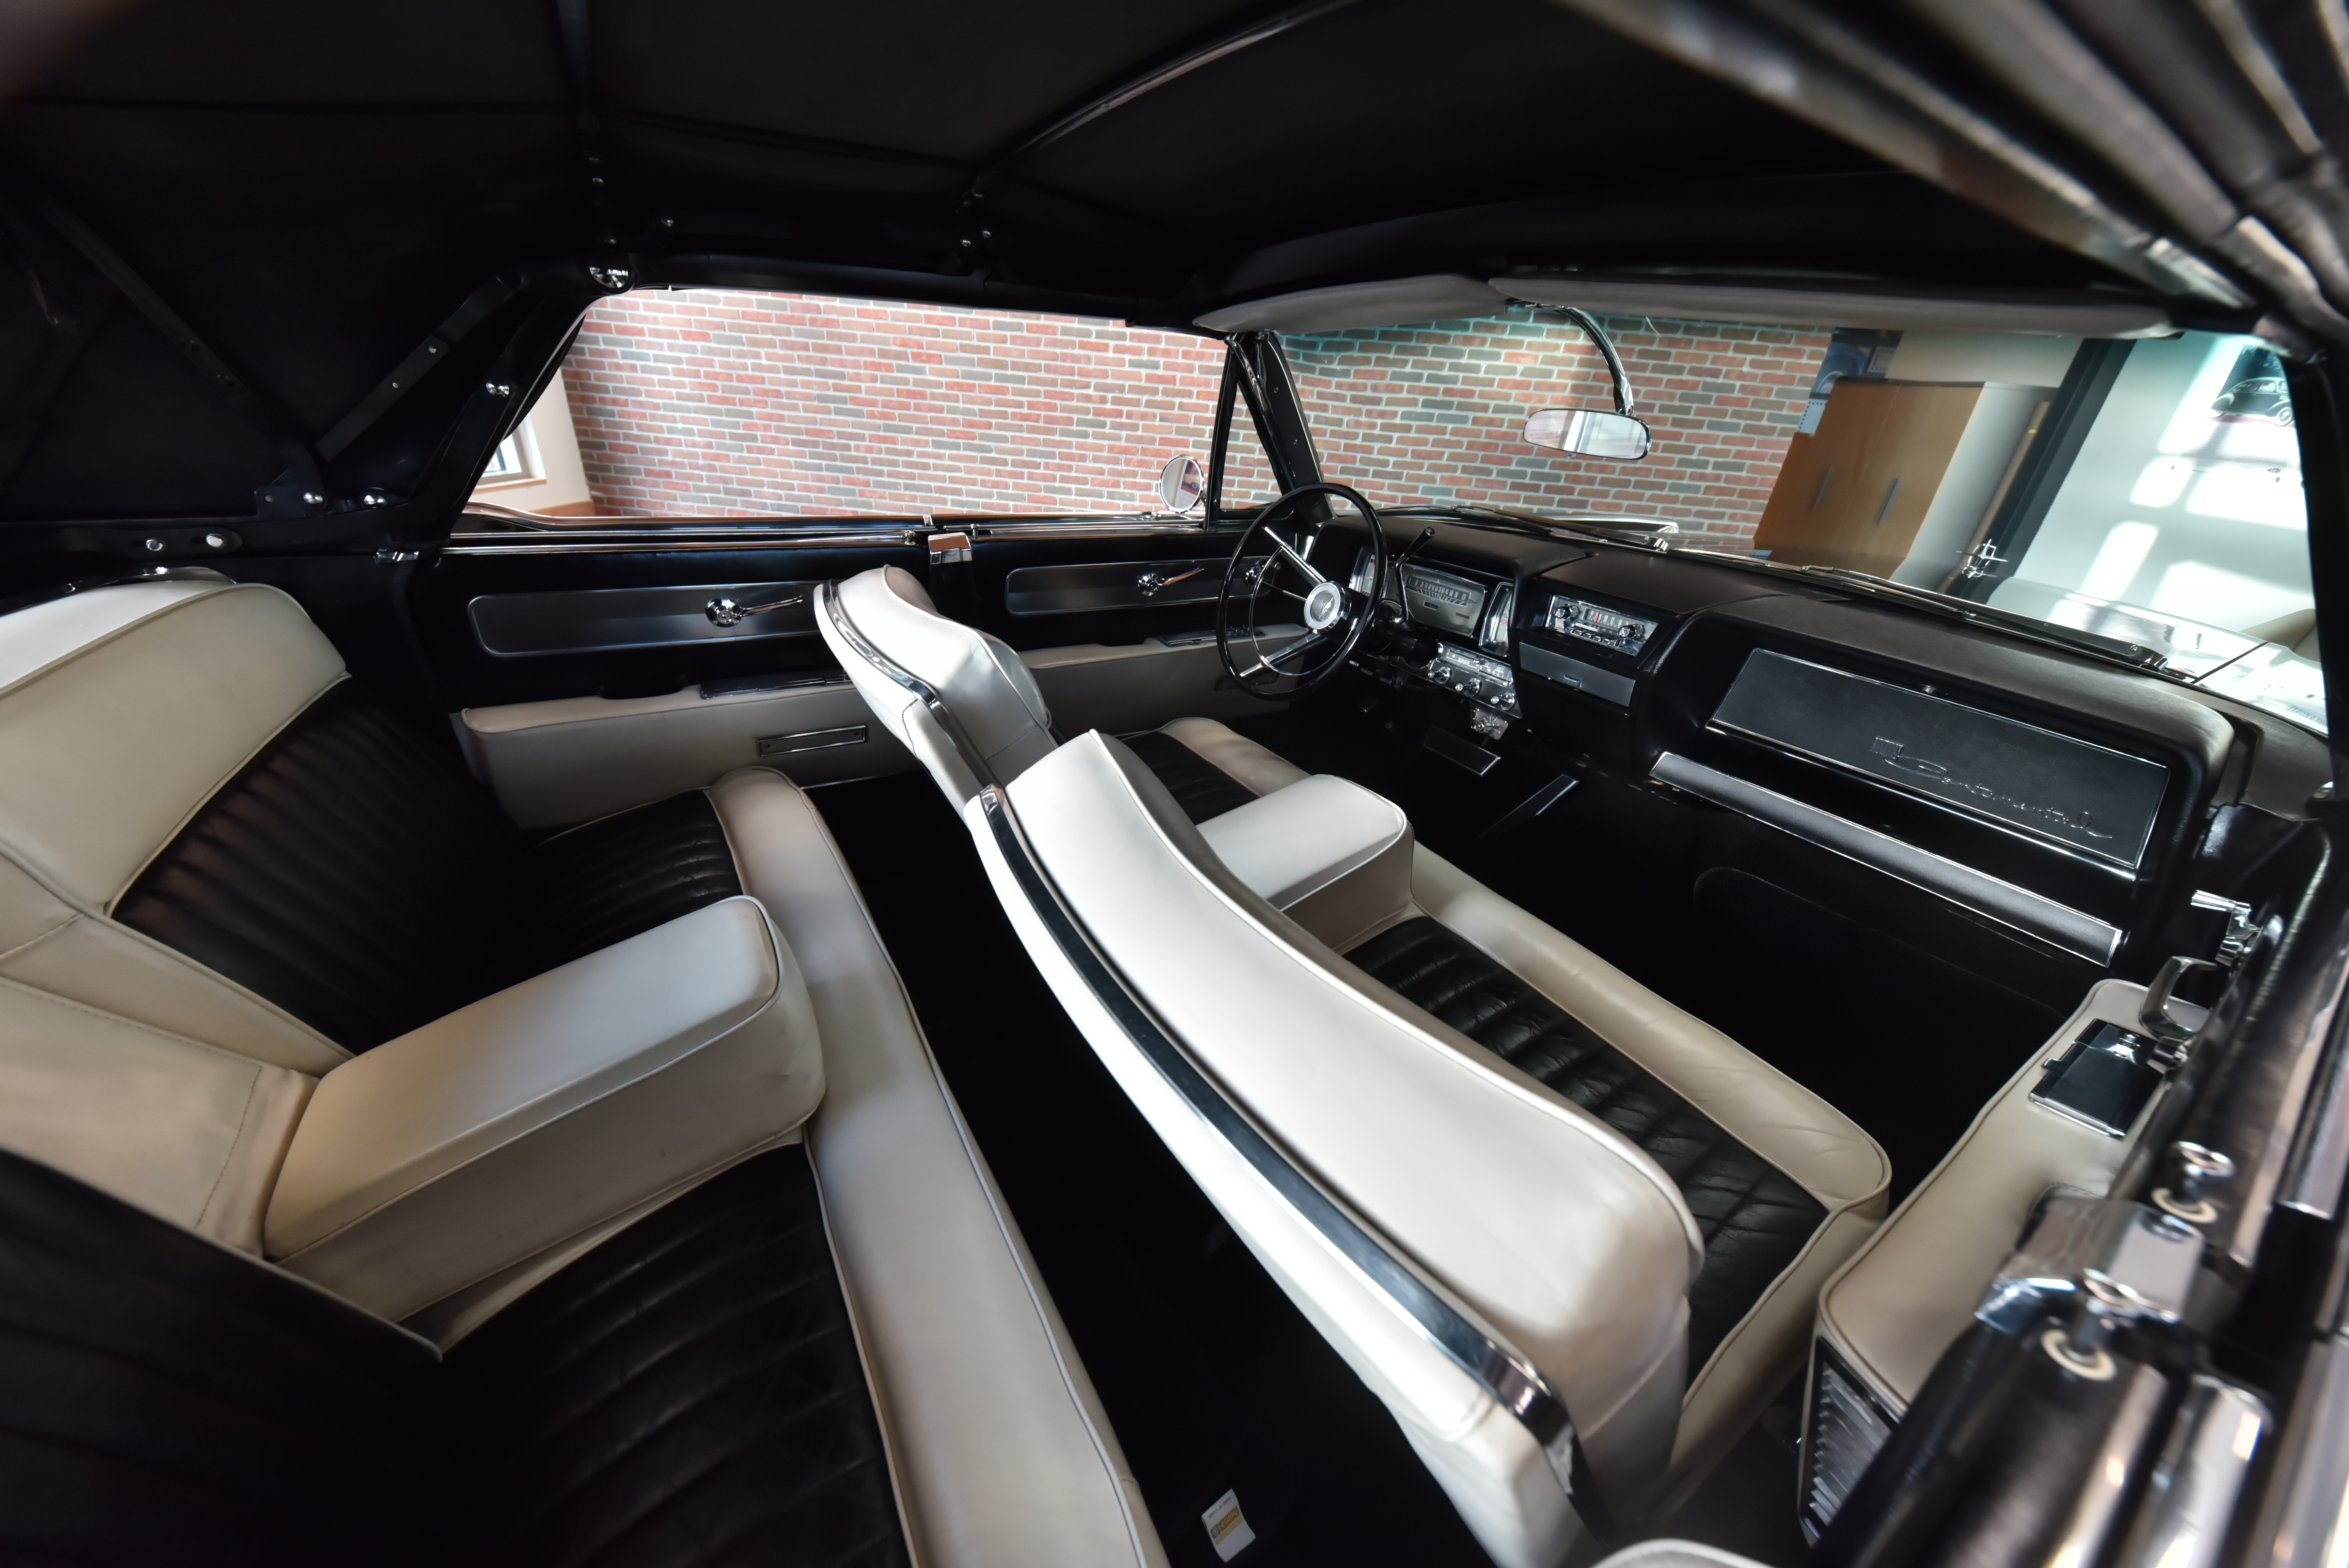 1966 1967 Lincoln Continental interior door handle iron post R/H 